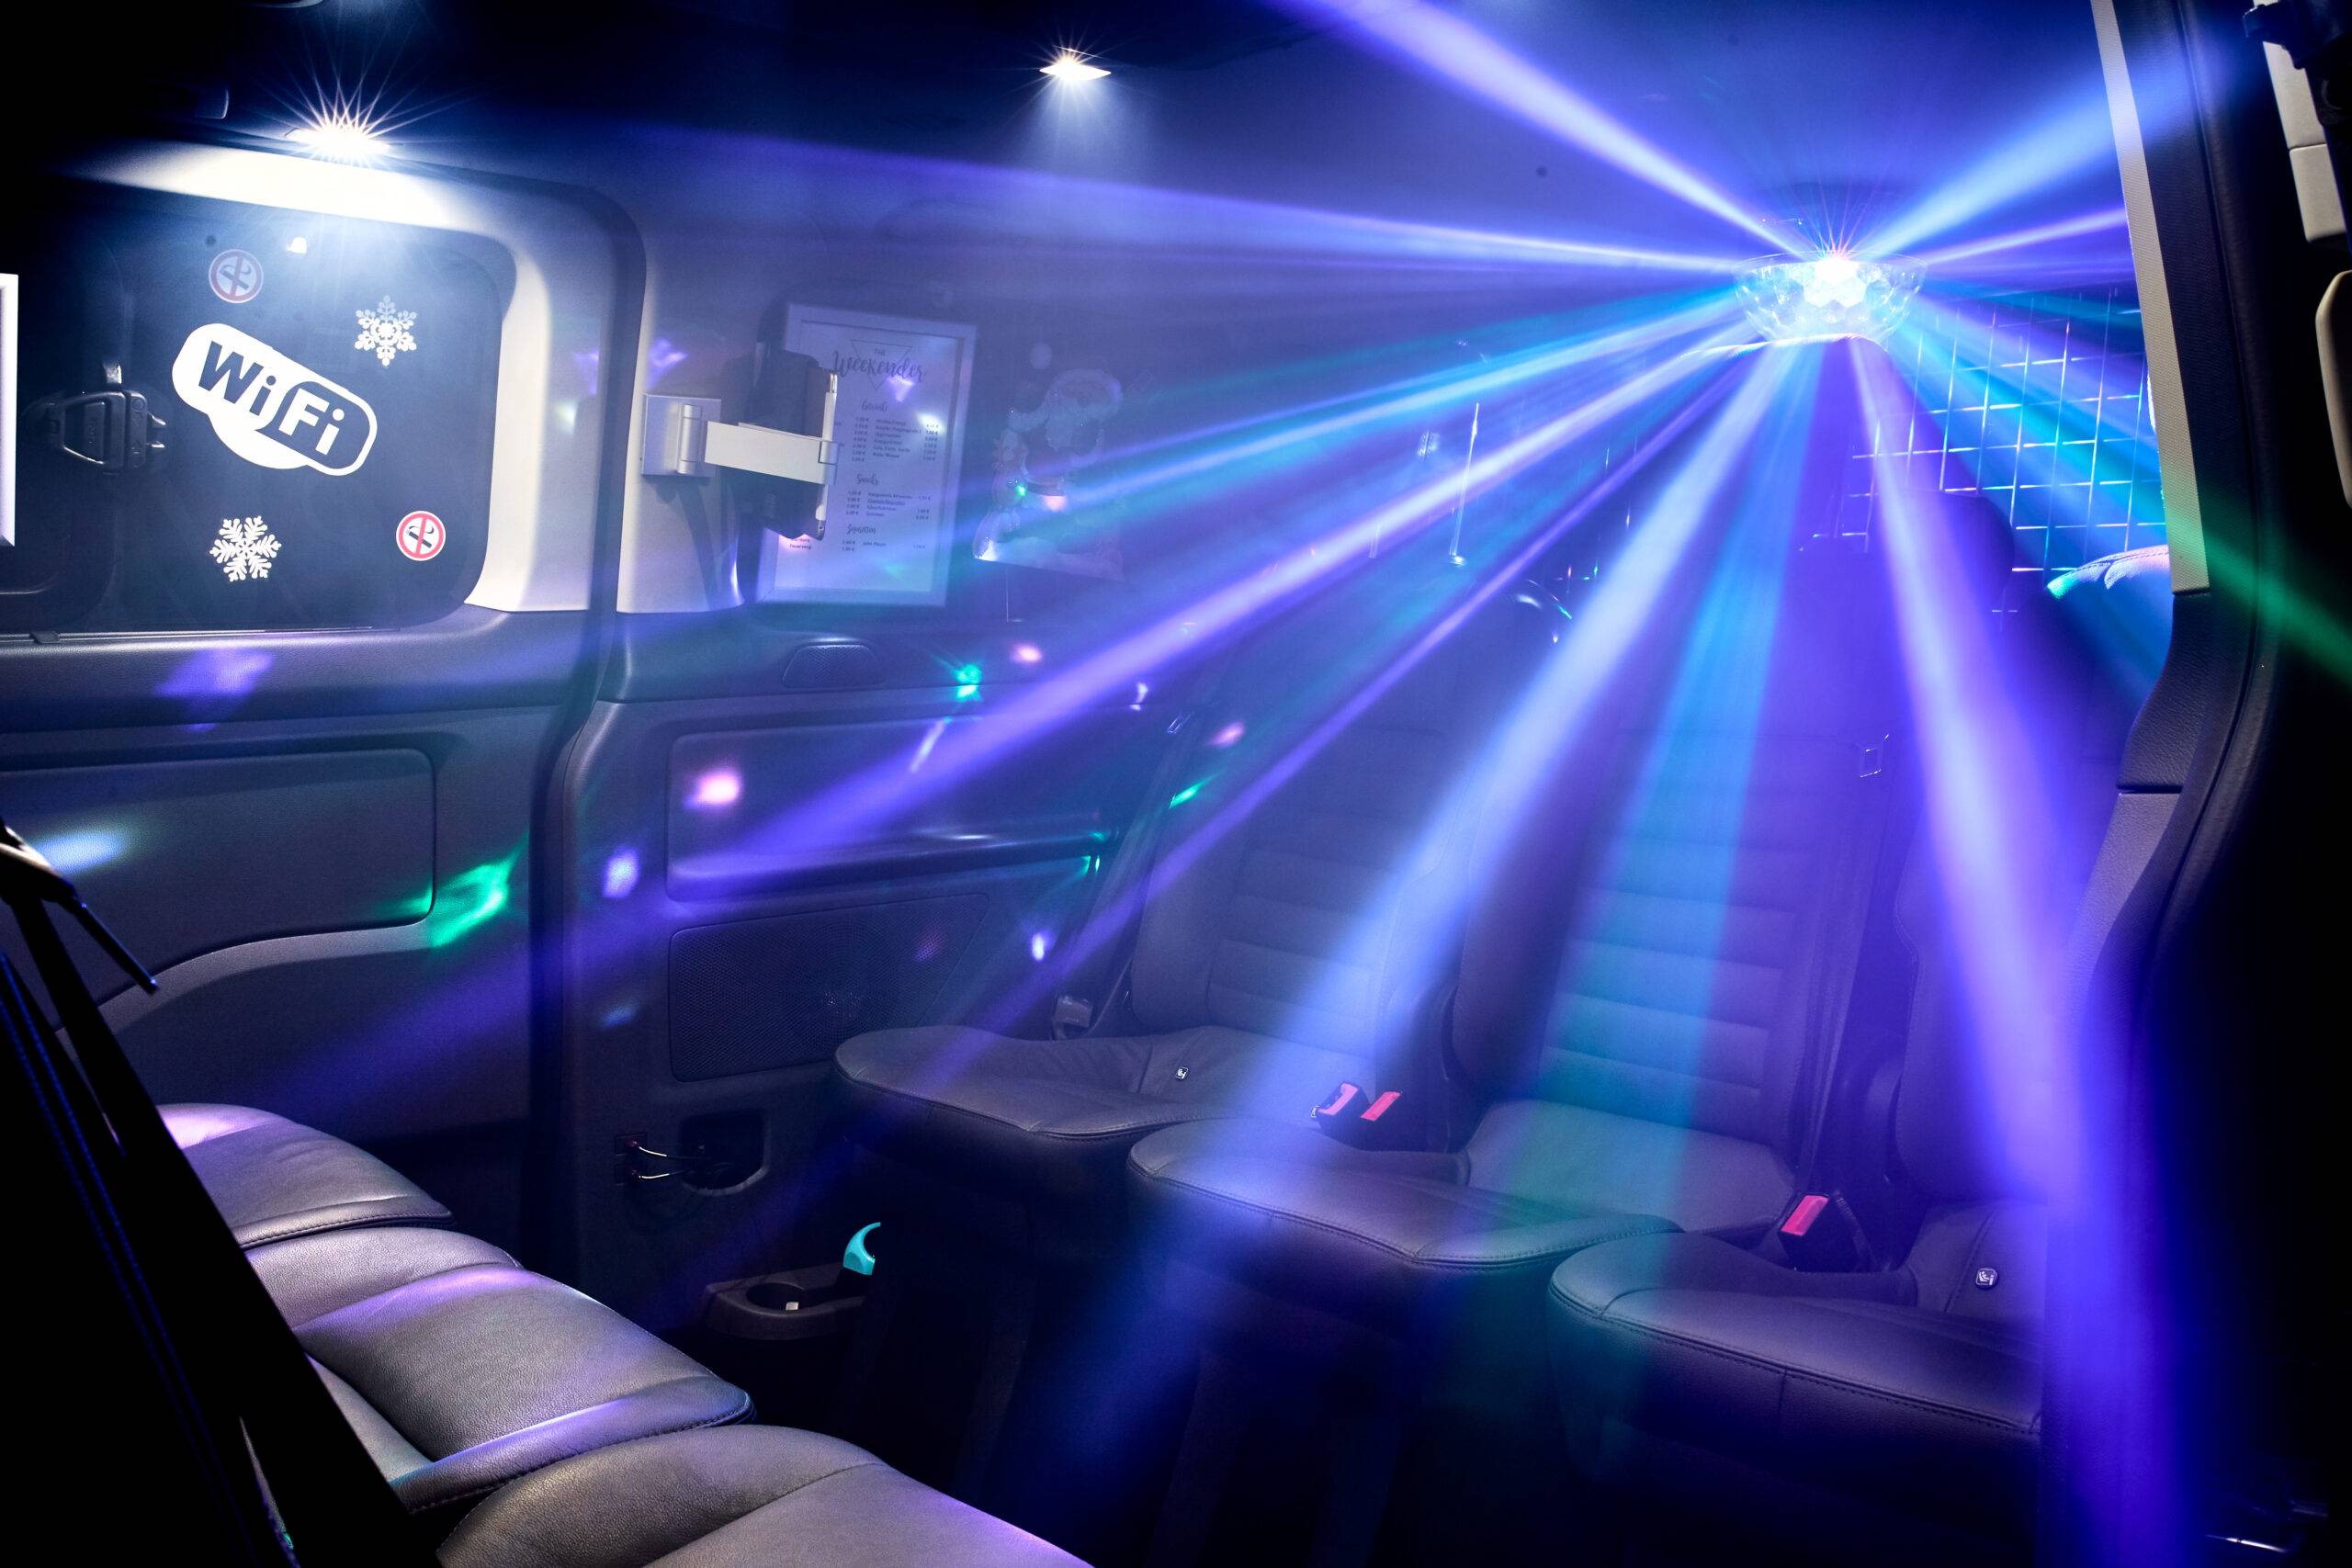 The Weekender Partybus Discobeleuchtung mit Nebel